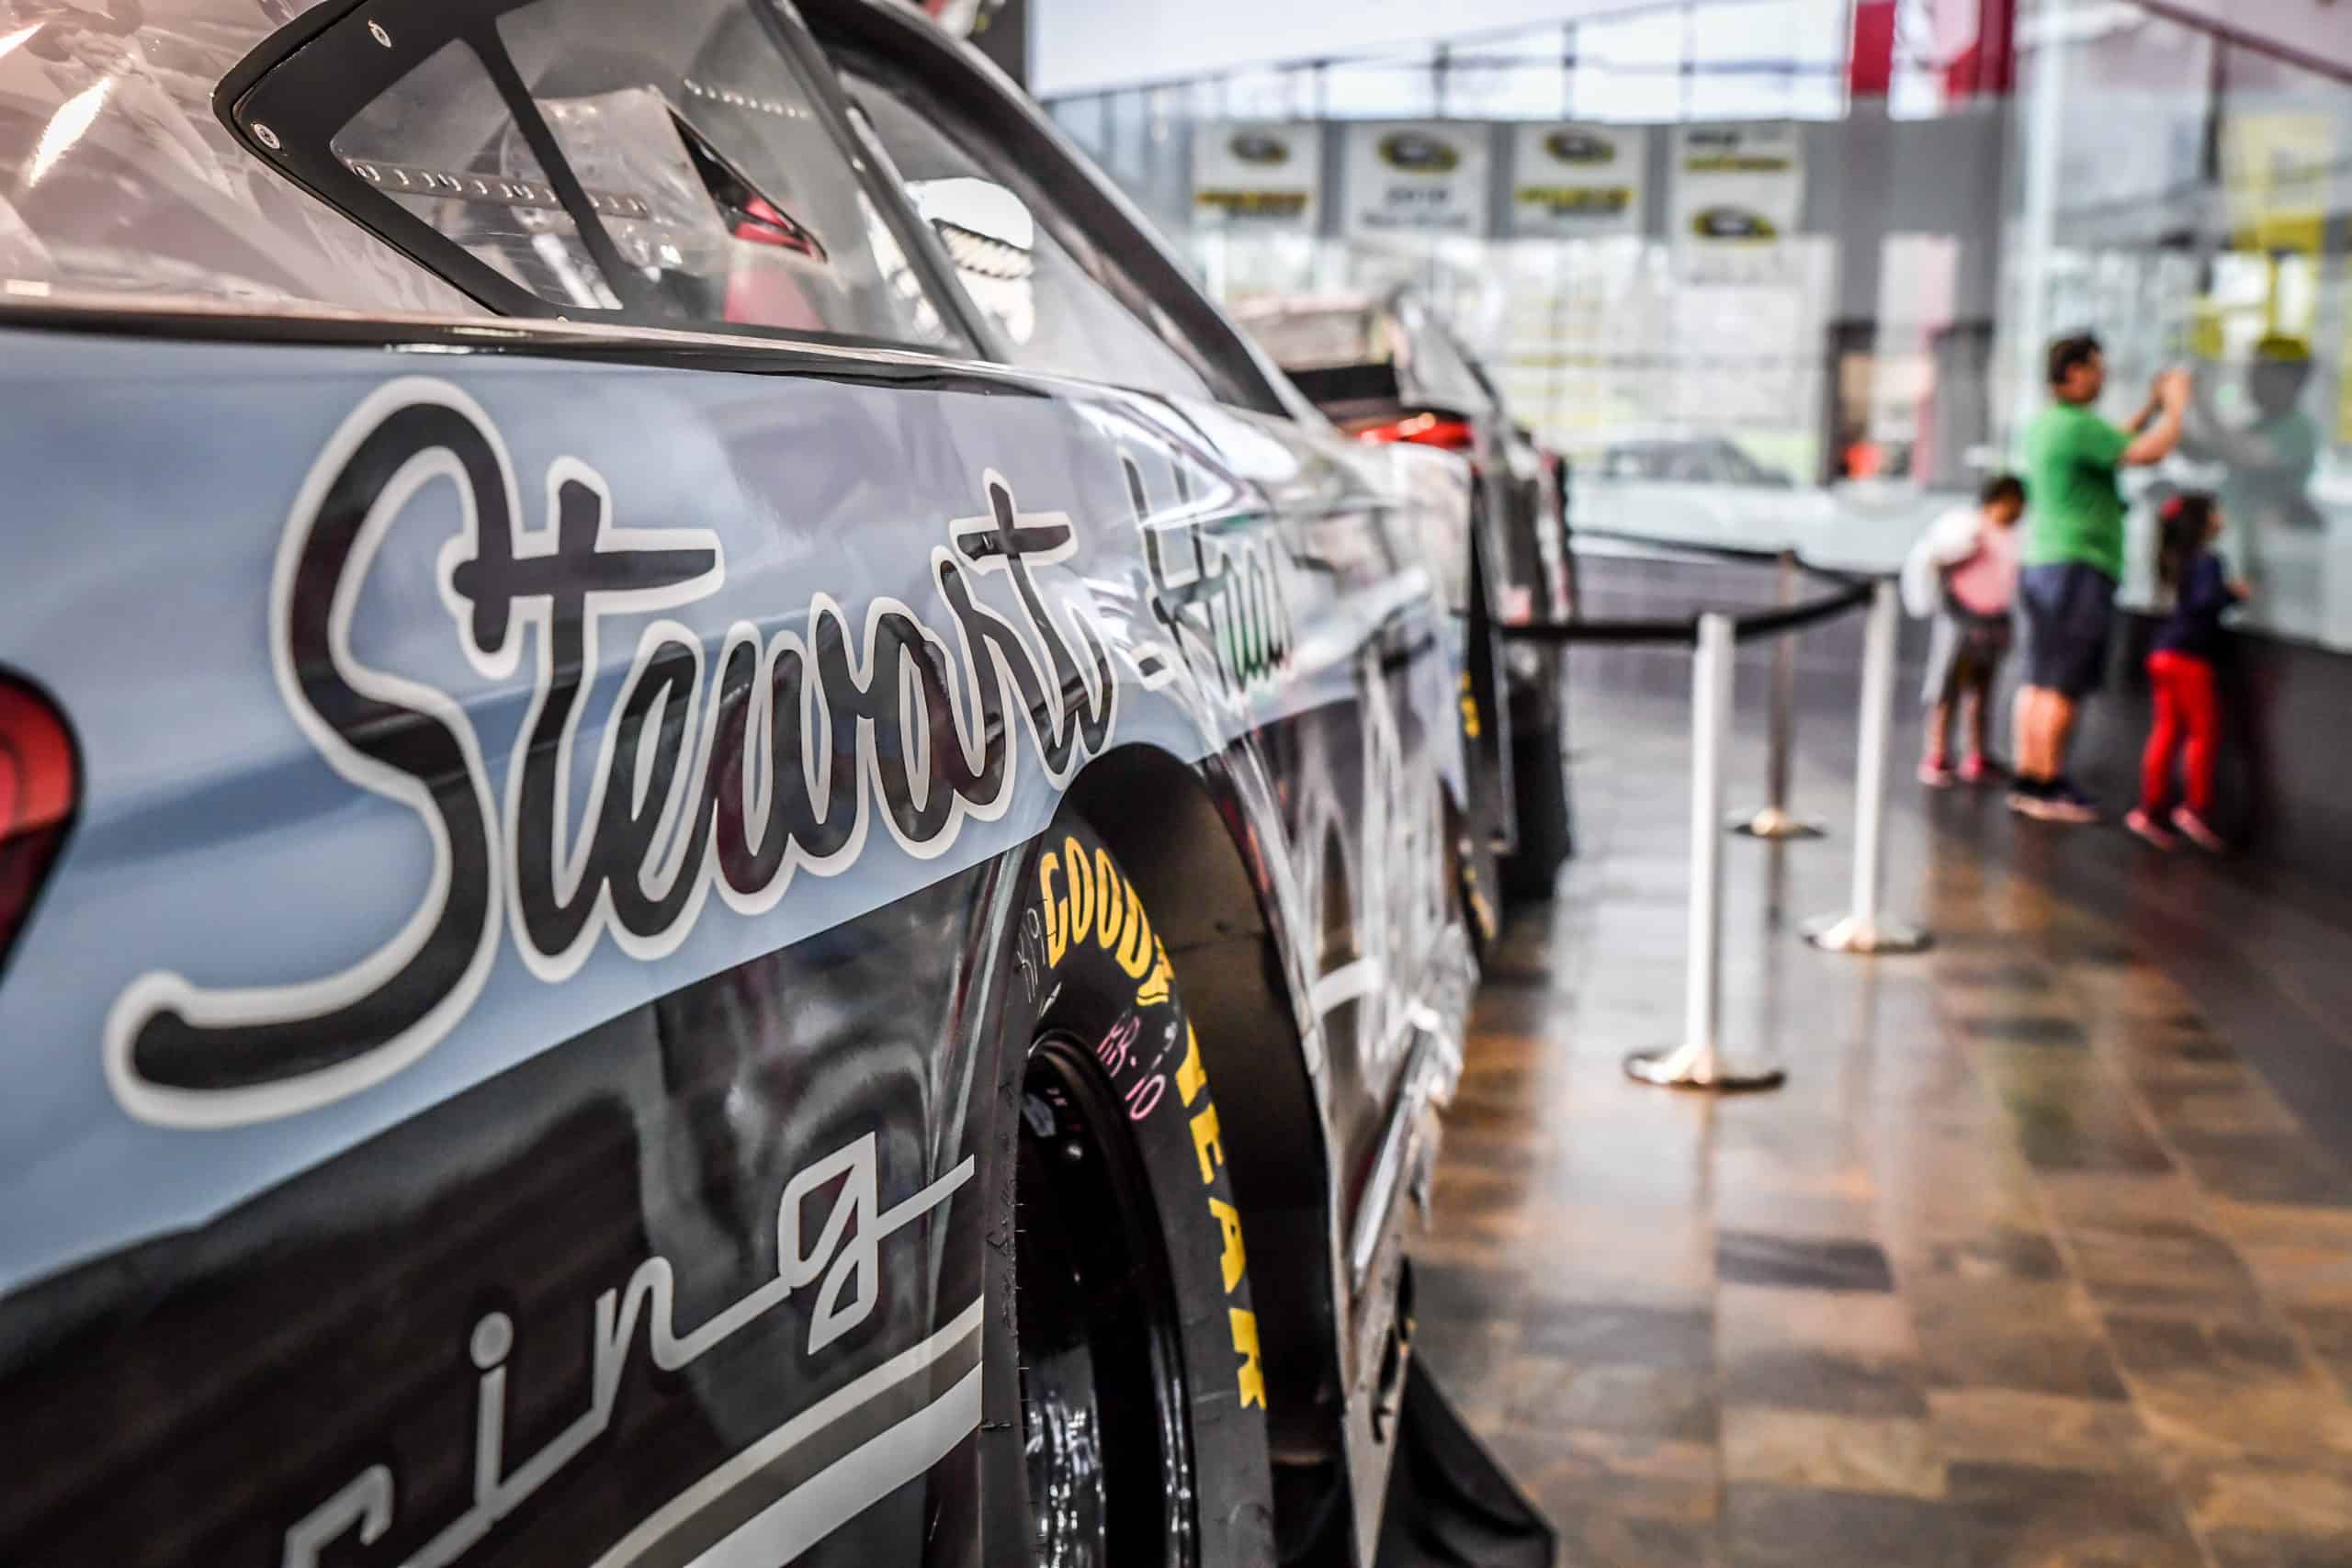 Visitors take photos inside Stewart-Haas Racing's NASCAR shop in Kannapolis 